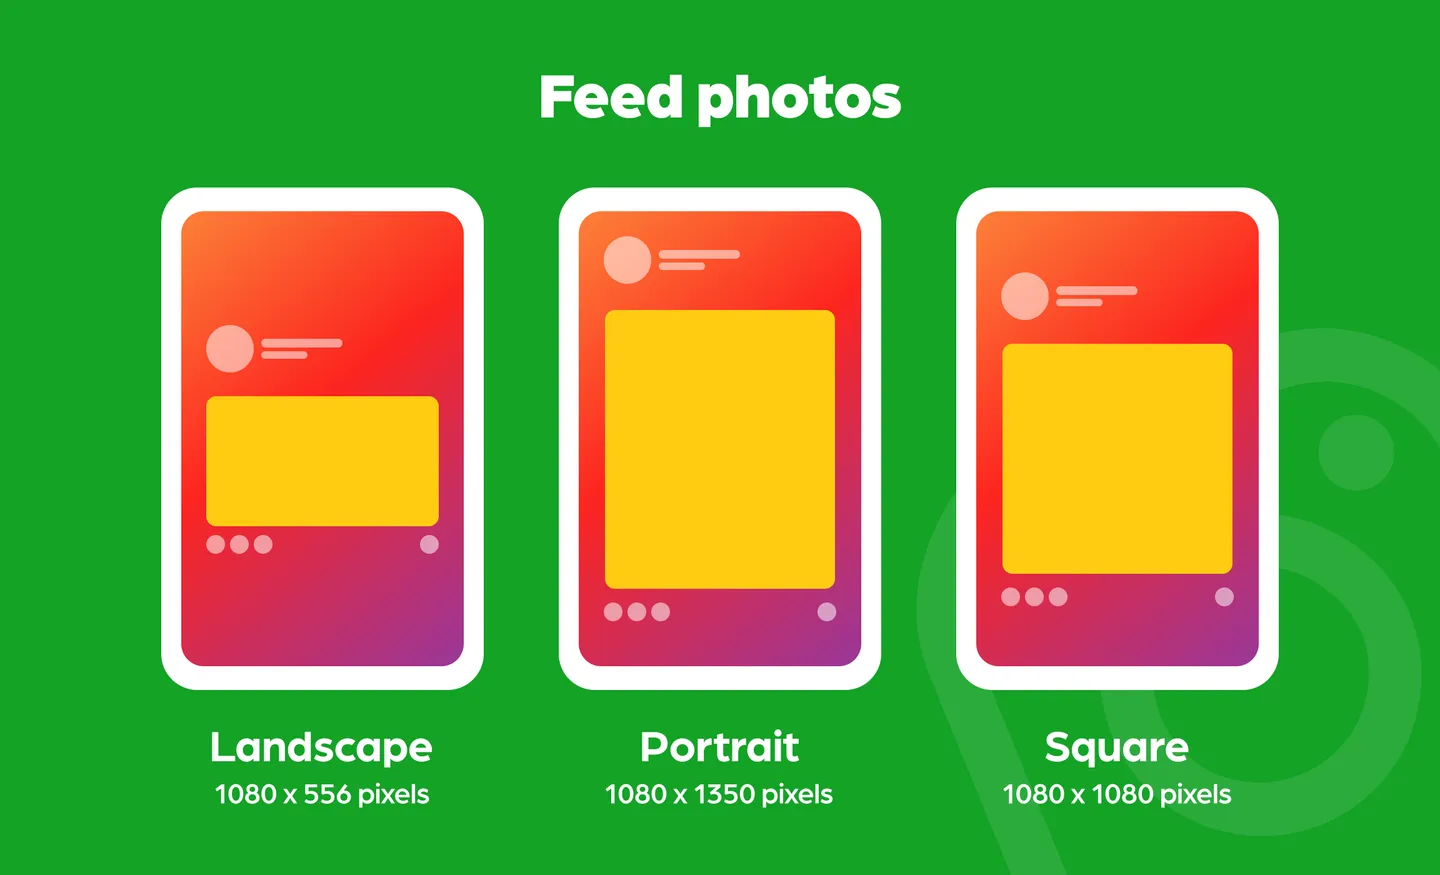 Instagram feed photos sizes